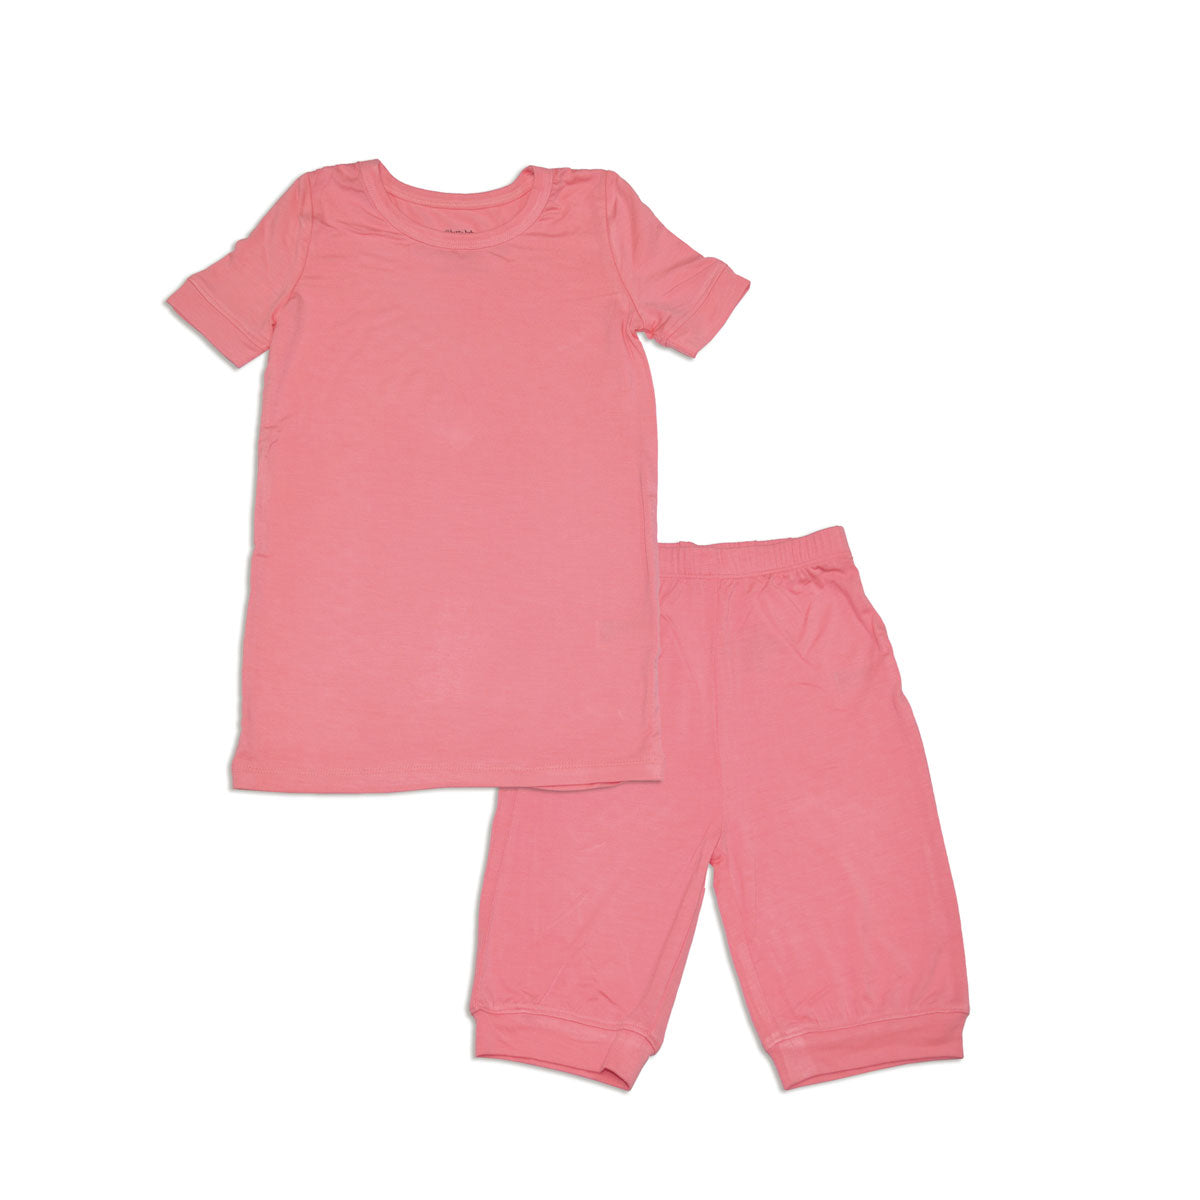 bamboo short sleeve top & short PJ set pink lemonade